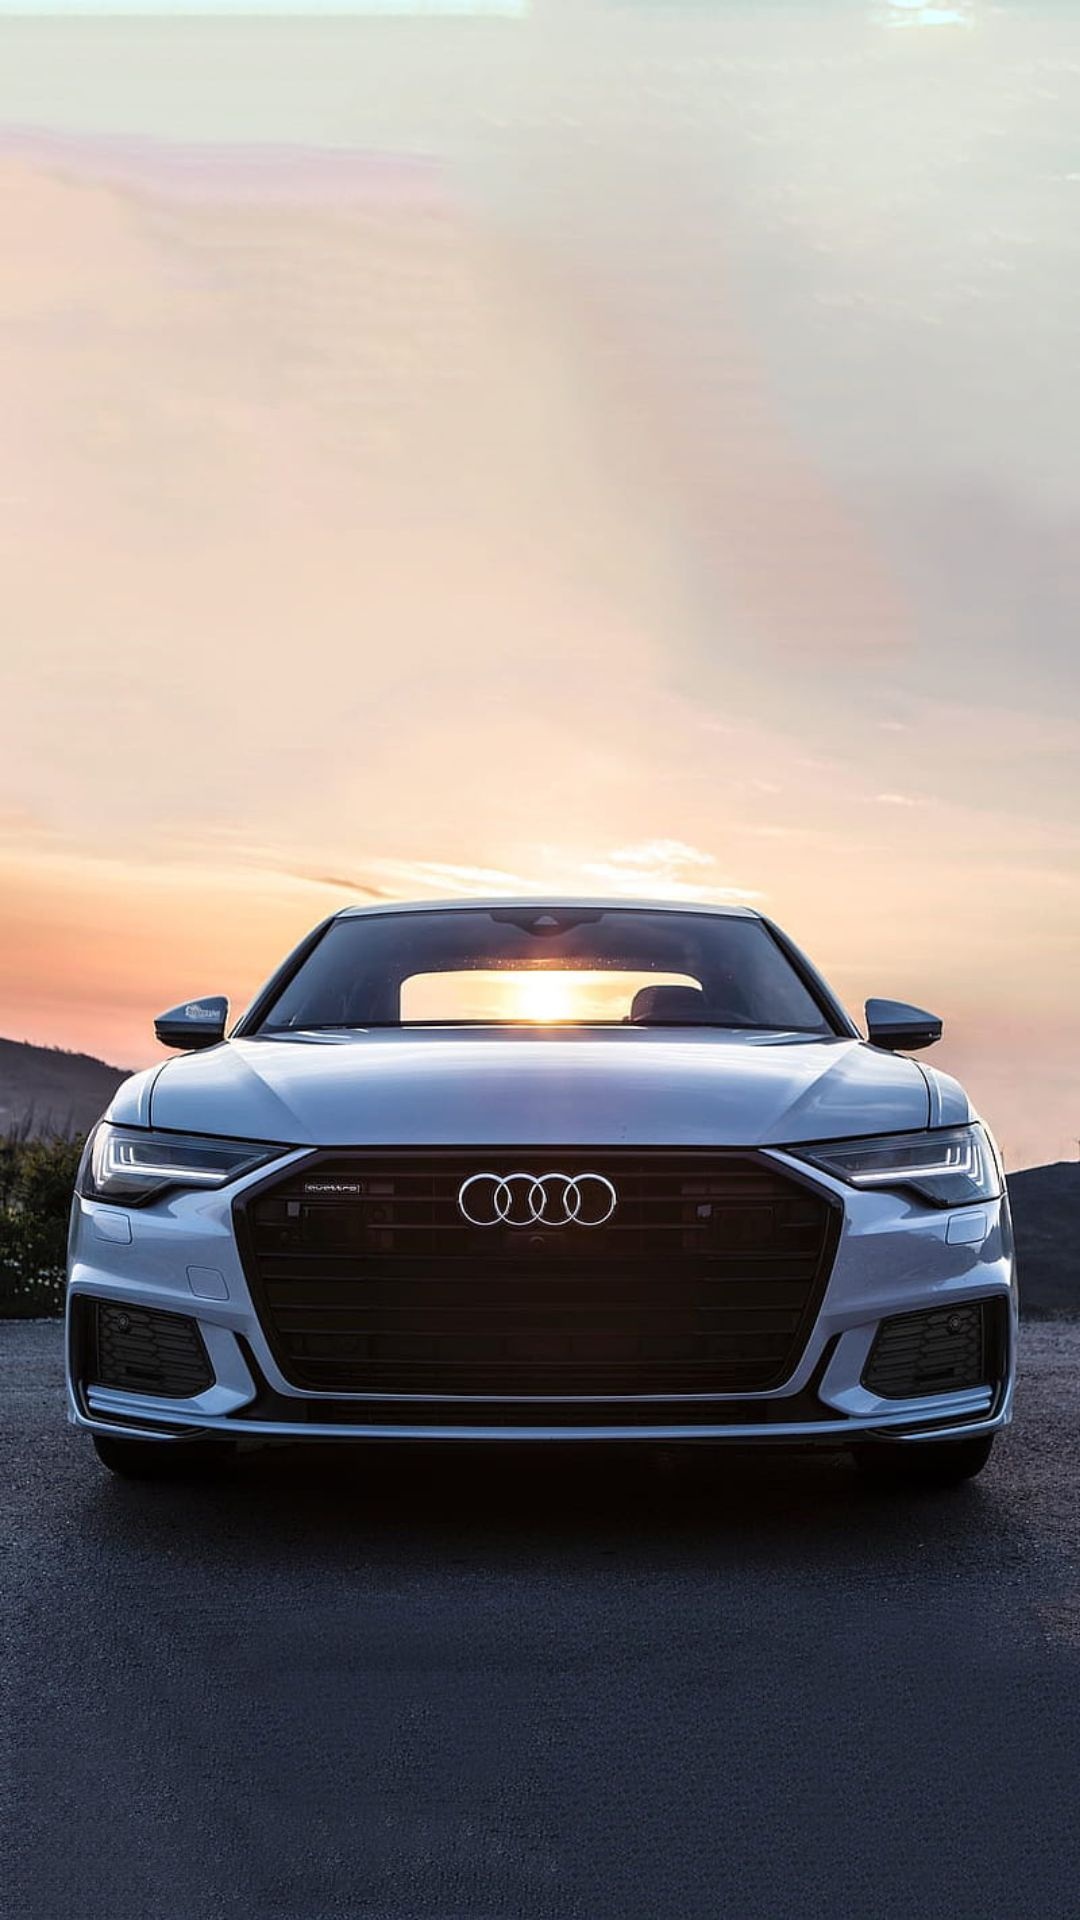 Audi A6, High-quality background, Elegant aesthetics, Top performance, 1080x1920 Full HD Phone